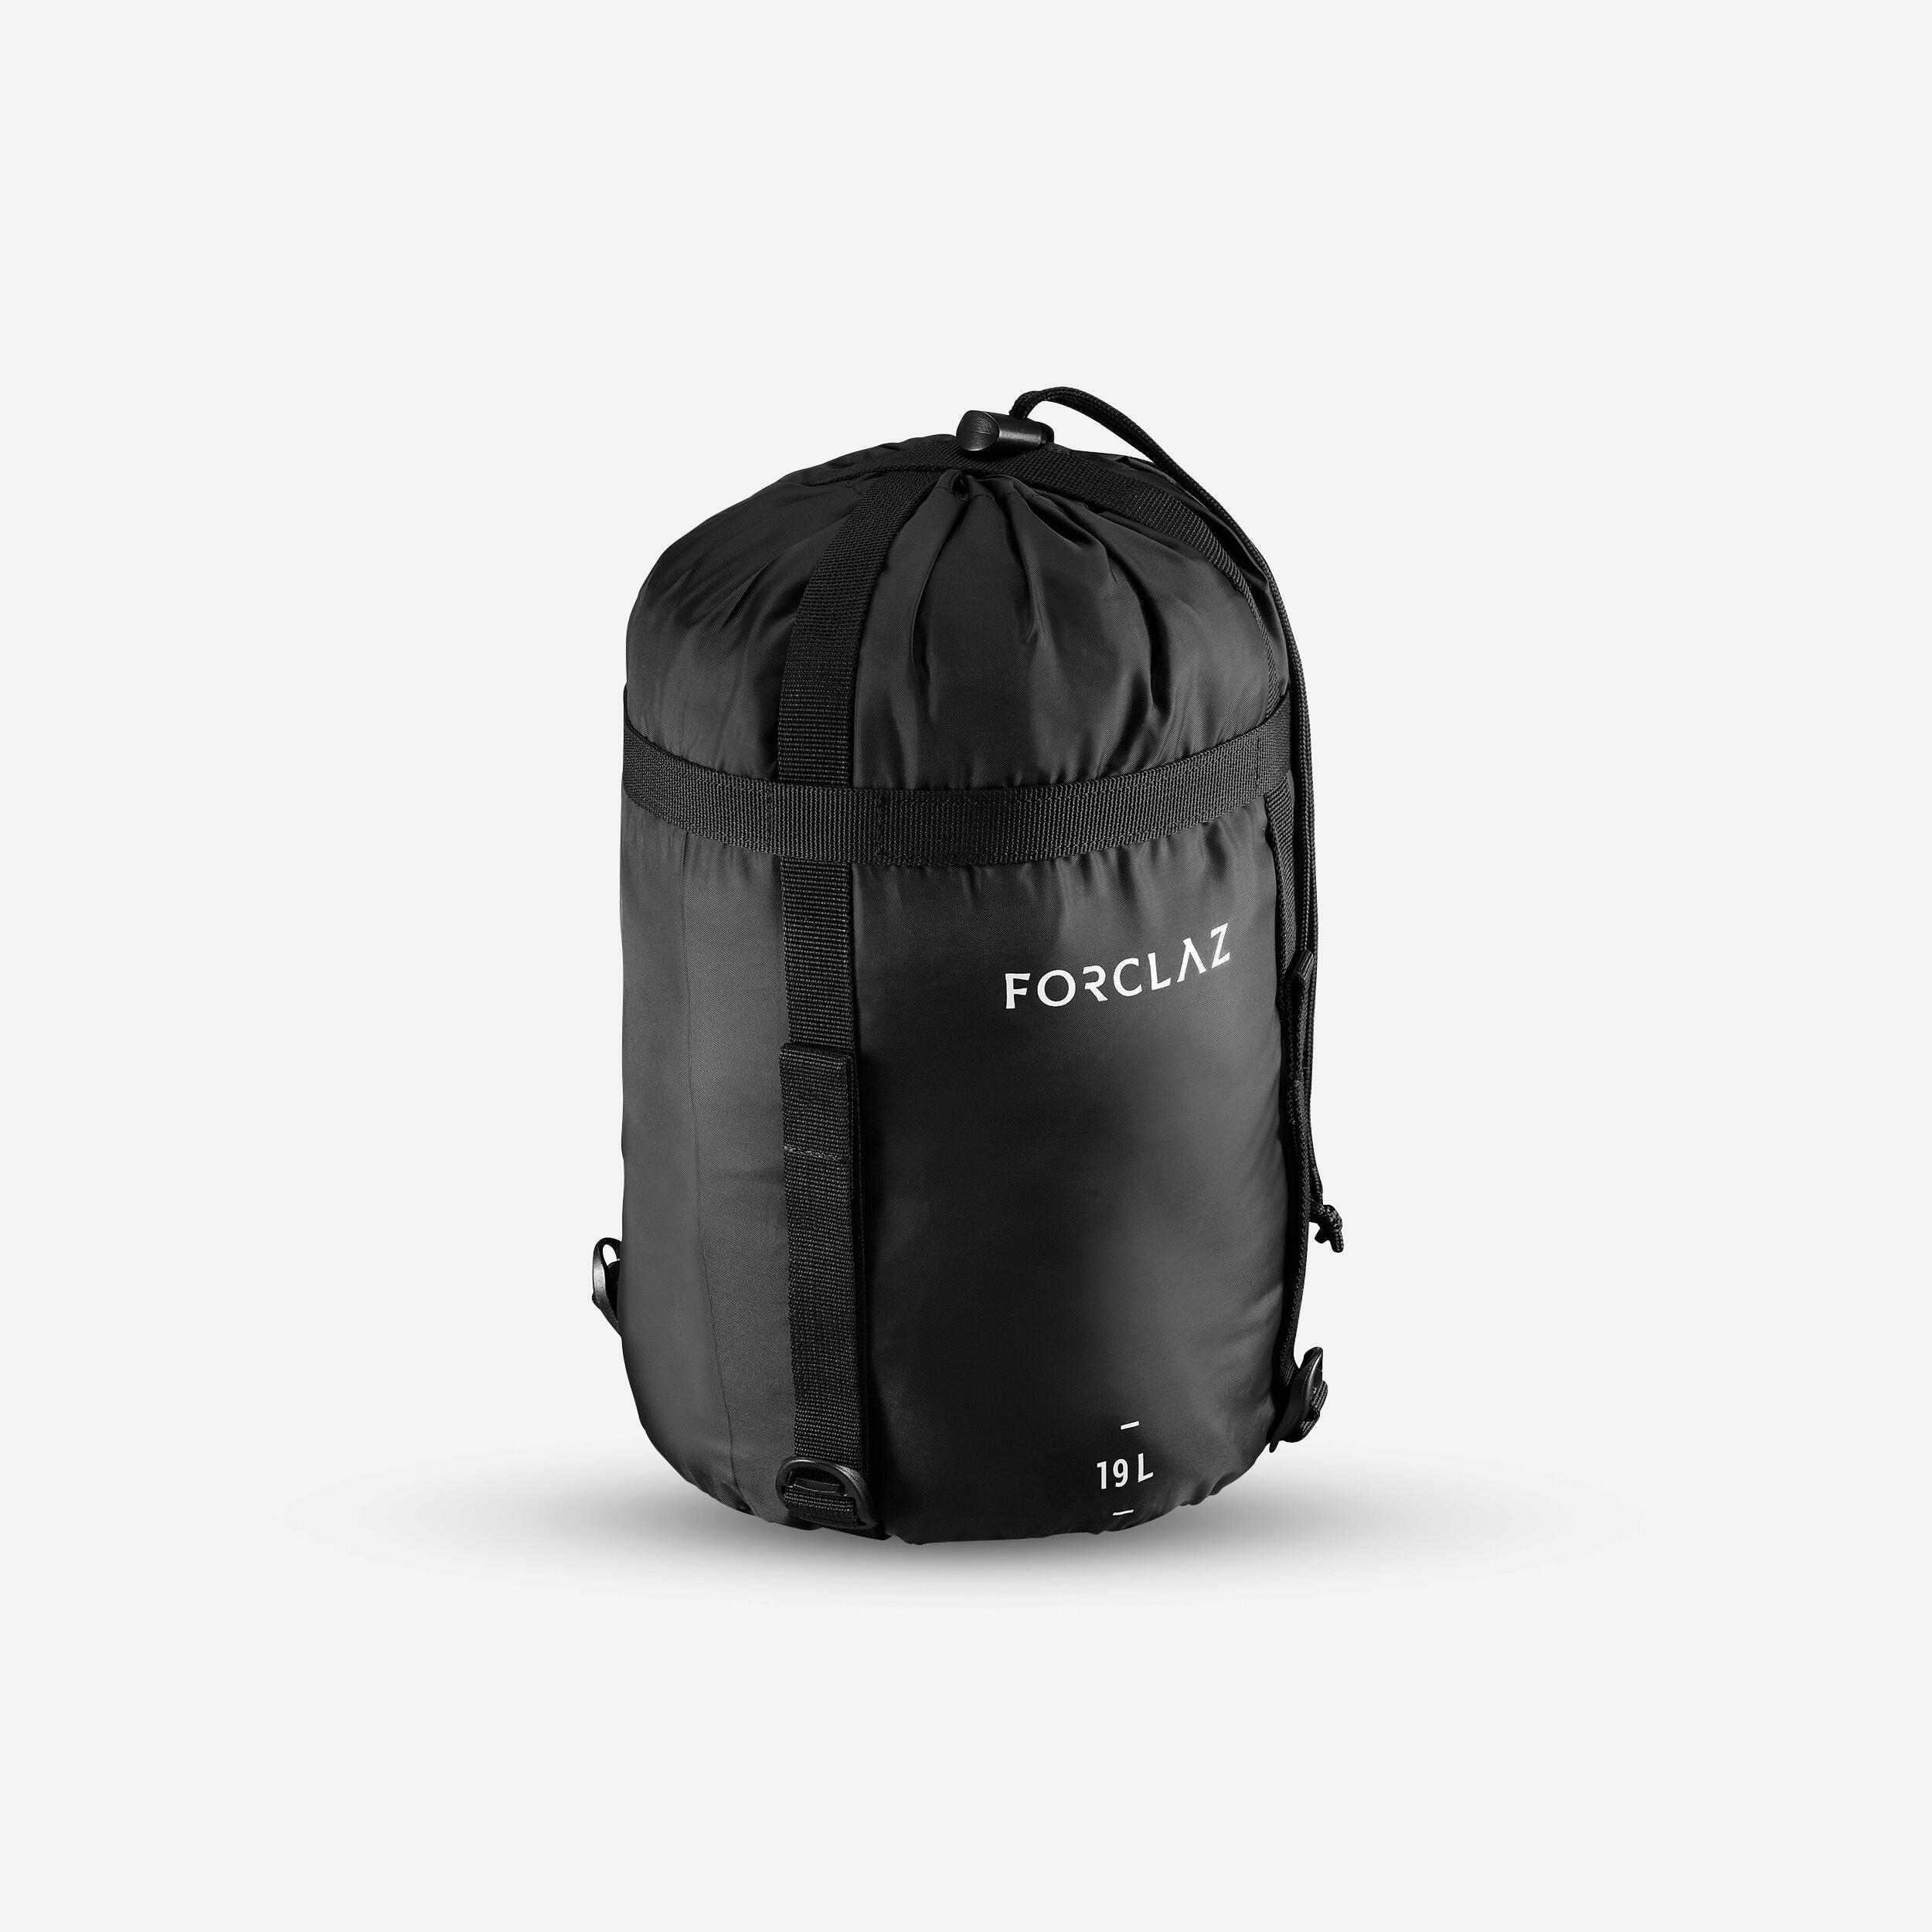 FORCLAZ Sleeping bag compression cover - MT500 - 19L